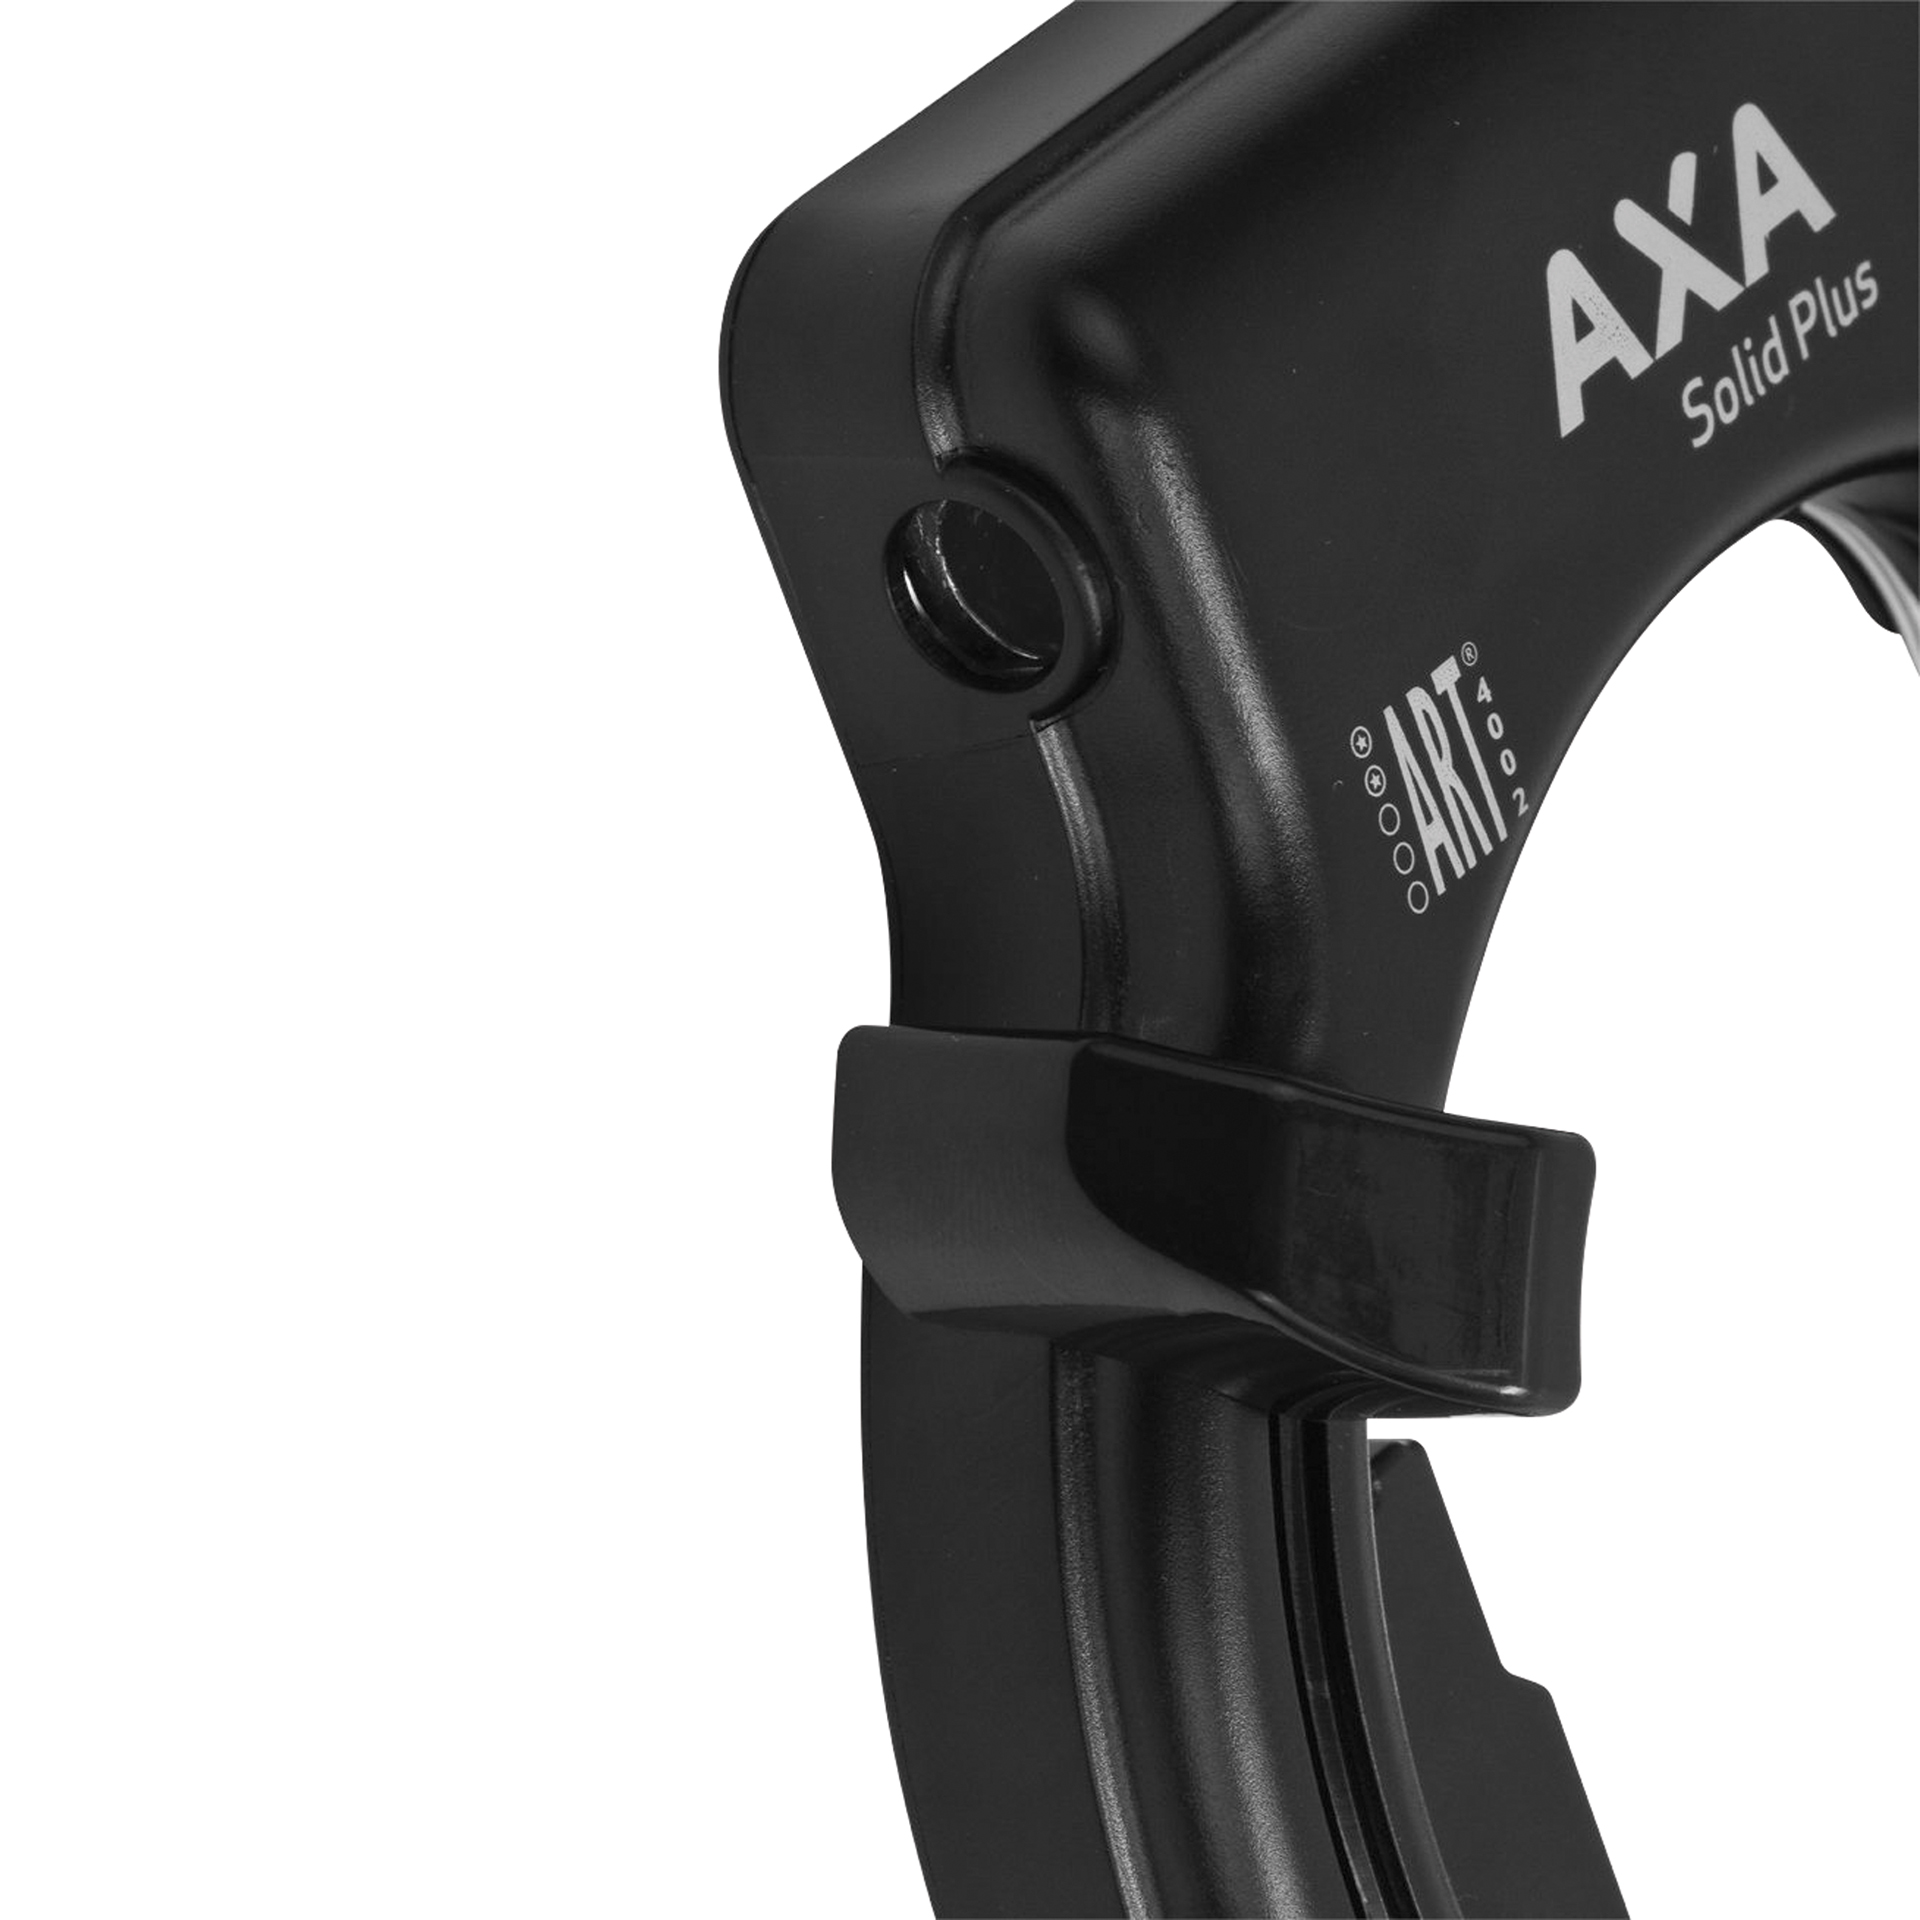 AXA Frameslot Solid Plus met insteekkabel Newton PI150 (5010194)